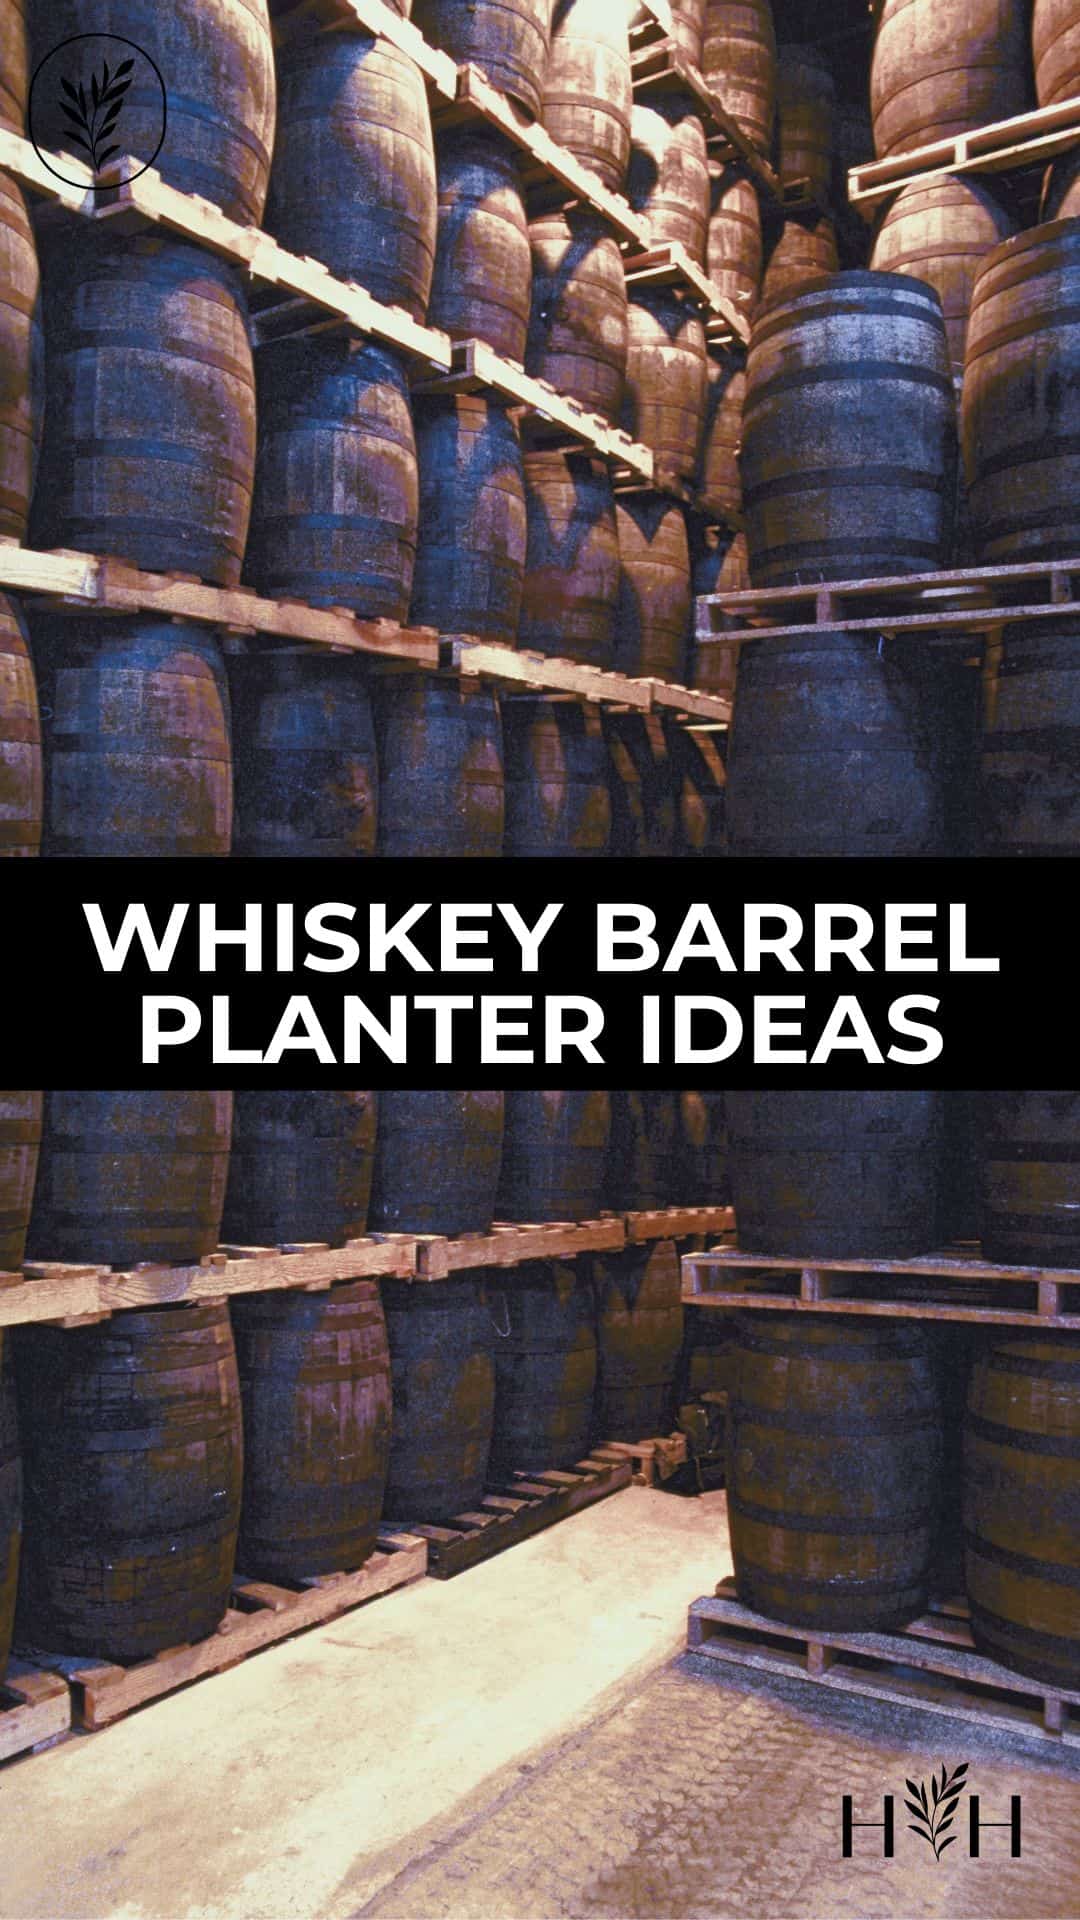 Whiskey barrel planter ideas via @home4theharvest